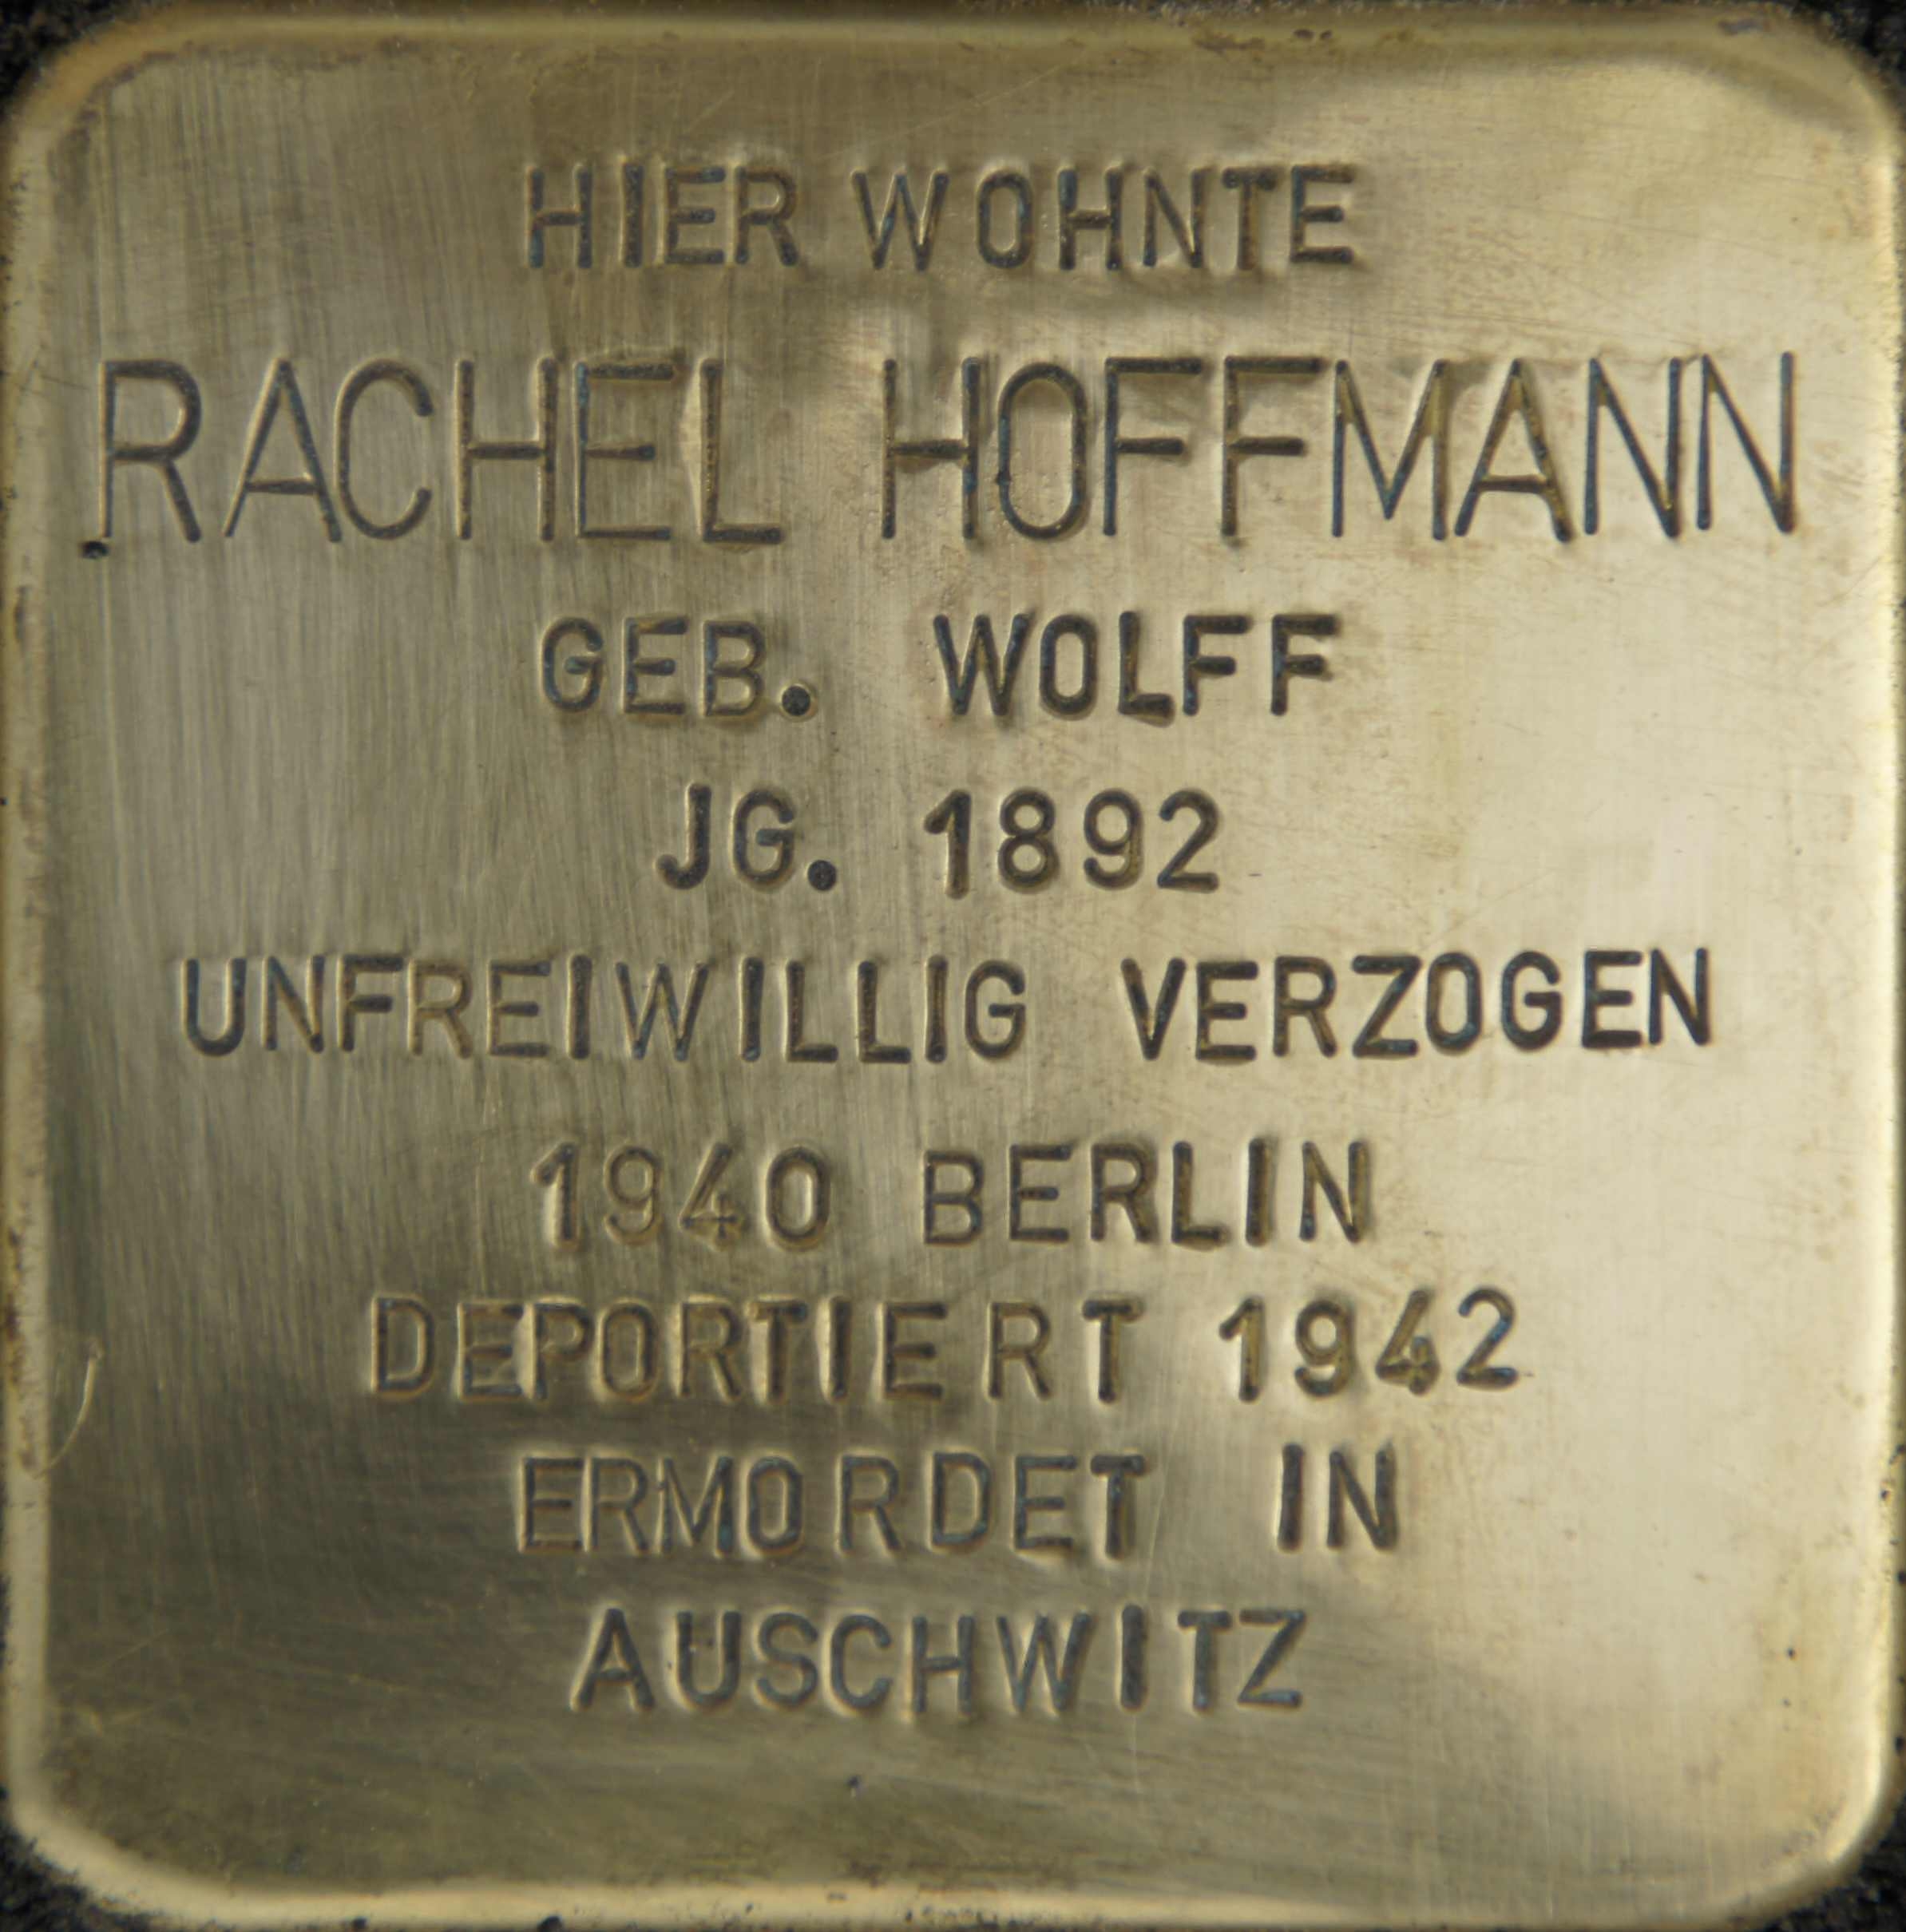 https://stolpersteineaurich.files.wordpress.com/1915/05/hoffmann-rahel-geb1.jpg